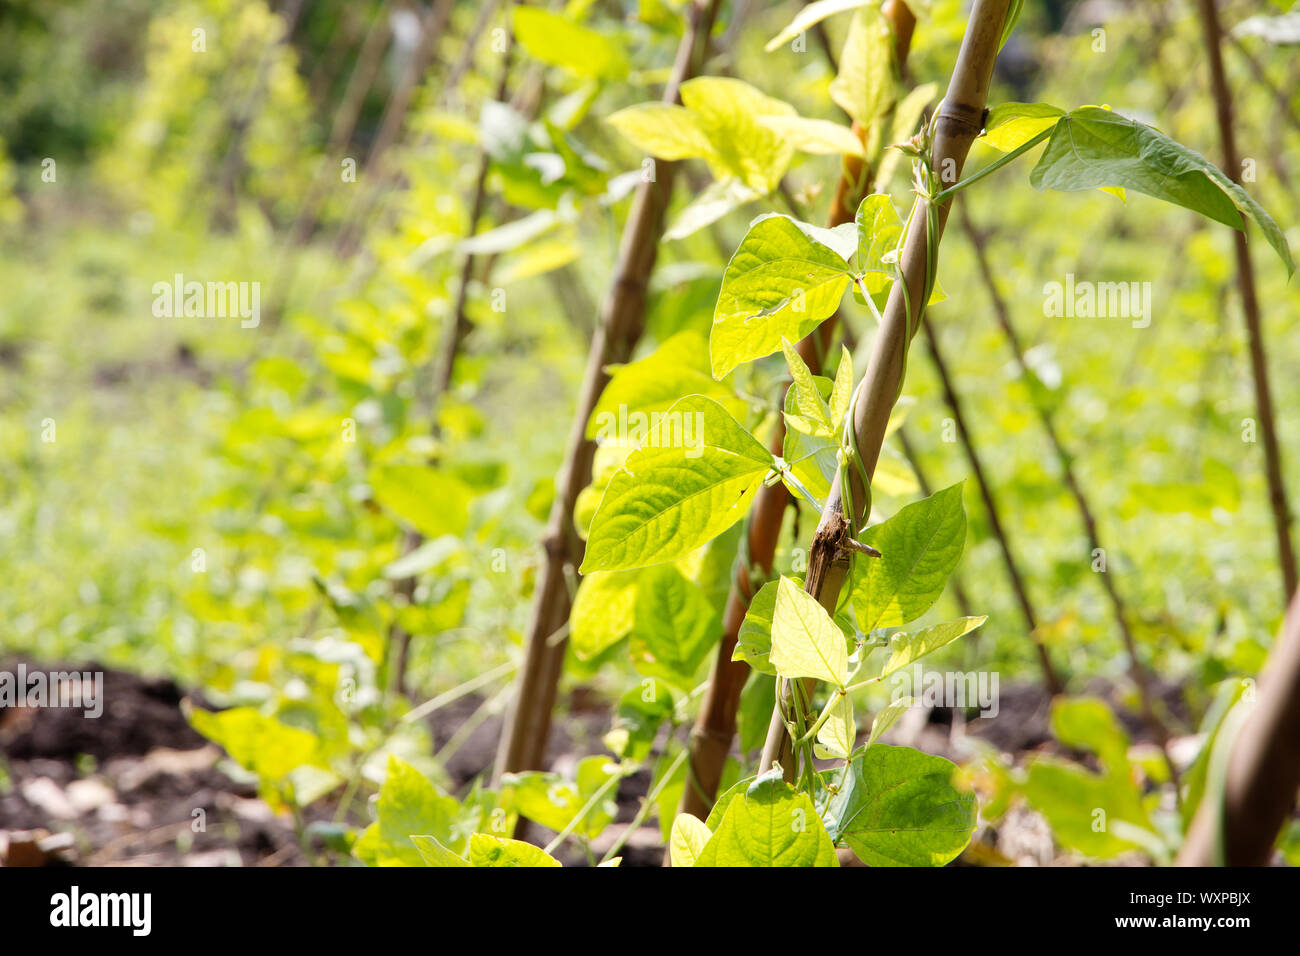 Yardlong bean farm Stock Photo